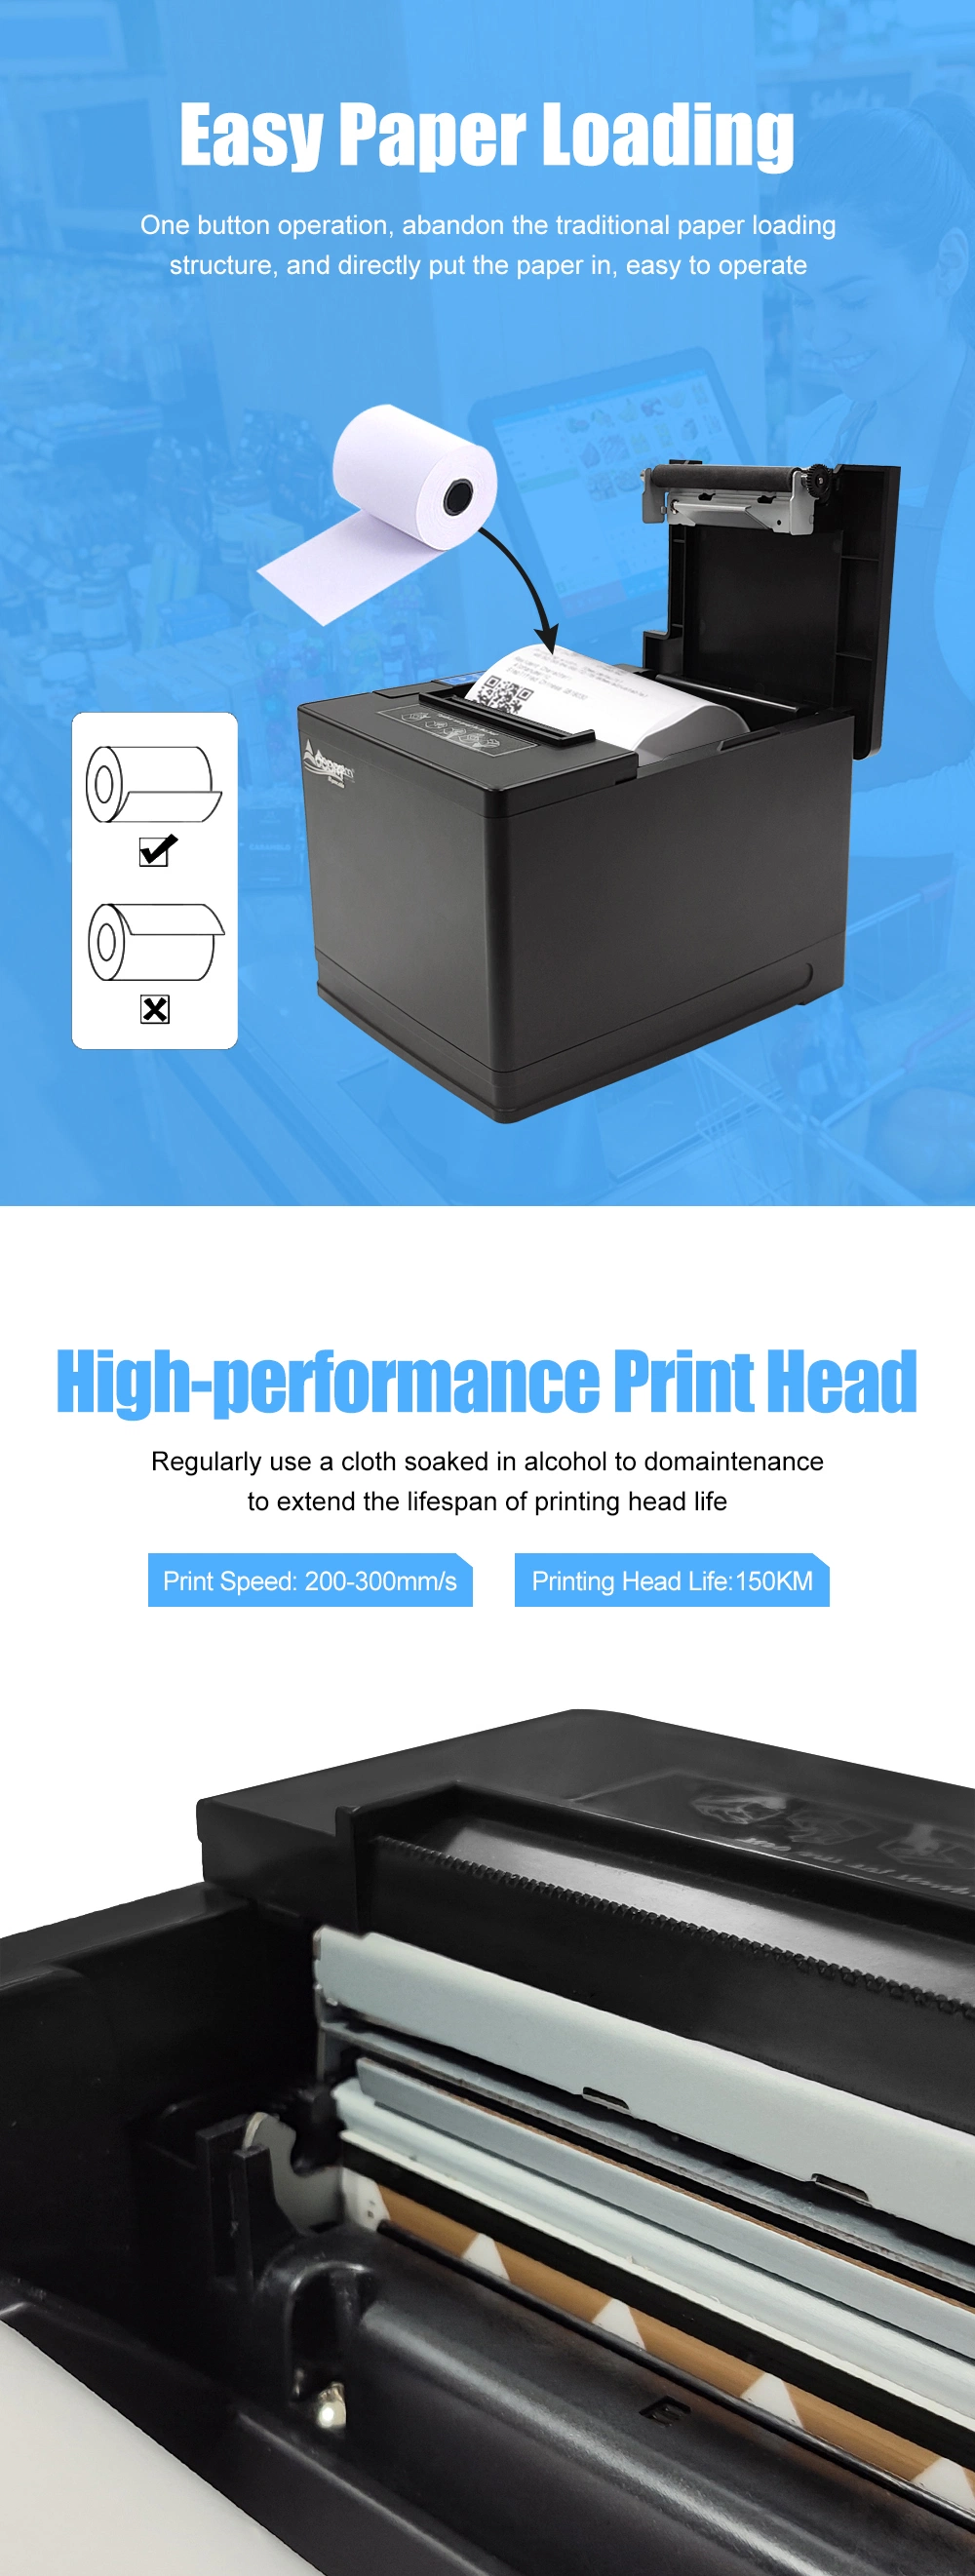 Ocpp-80s Ocom 80mm Thermal Receipt Printer with Auto Cutter